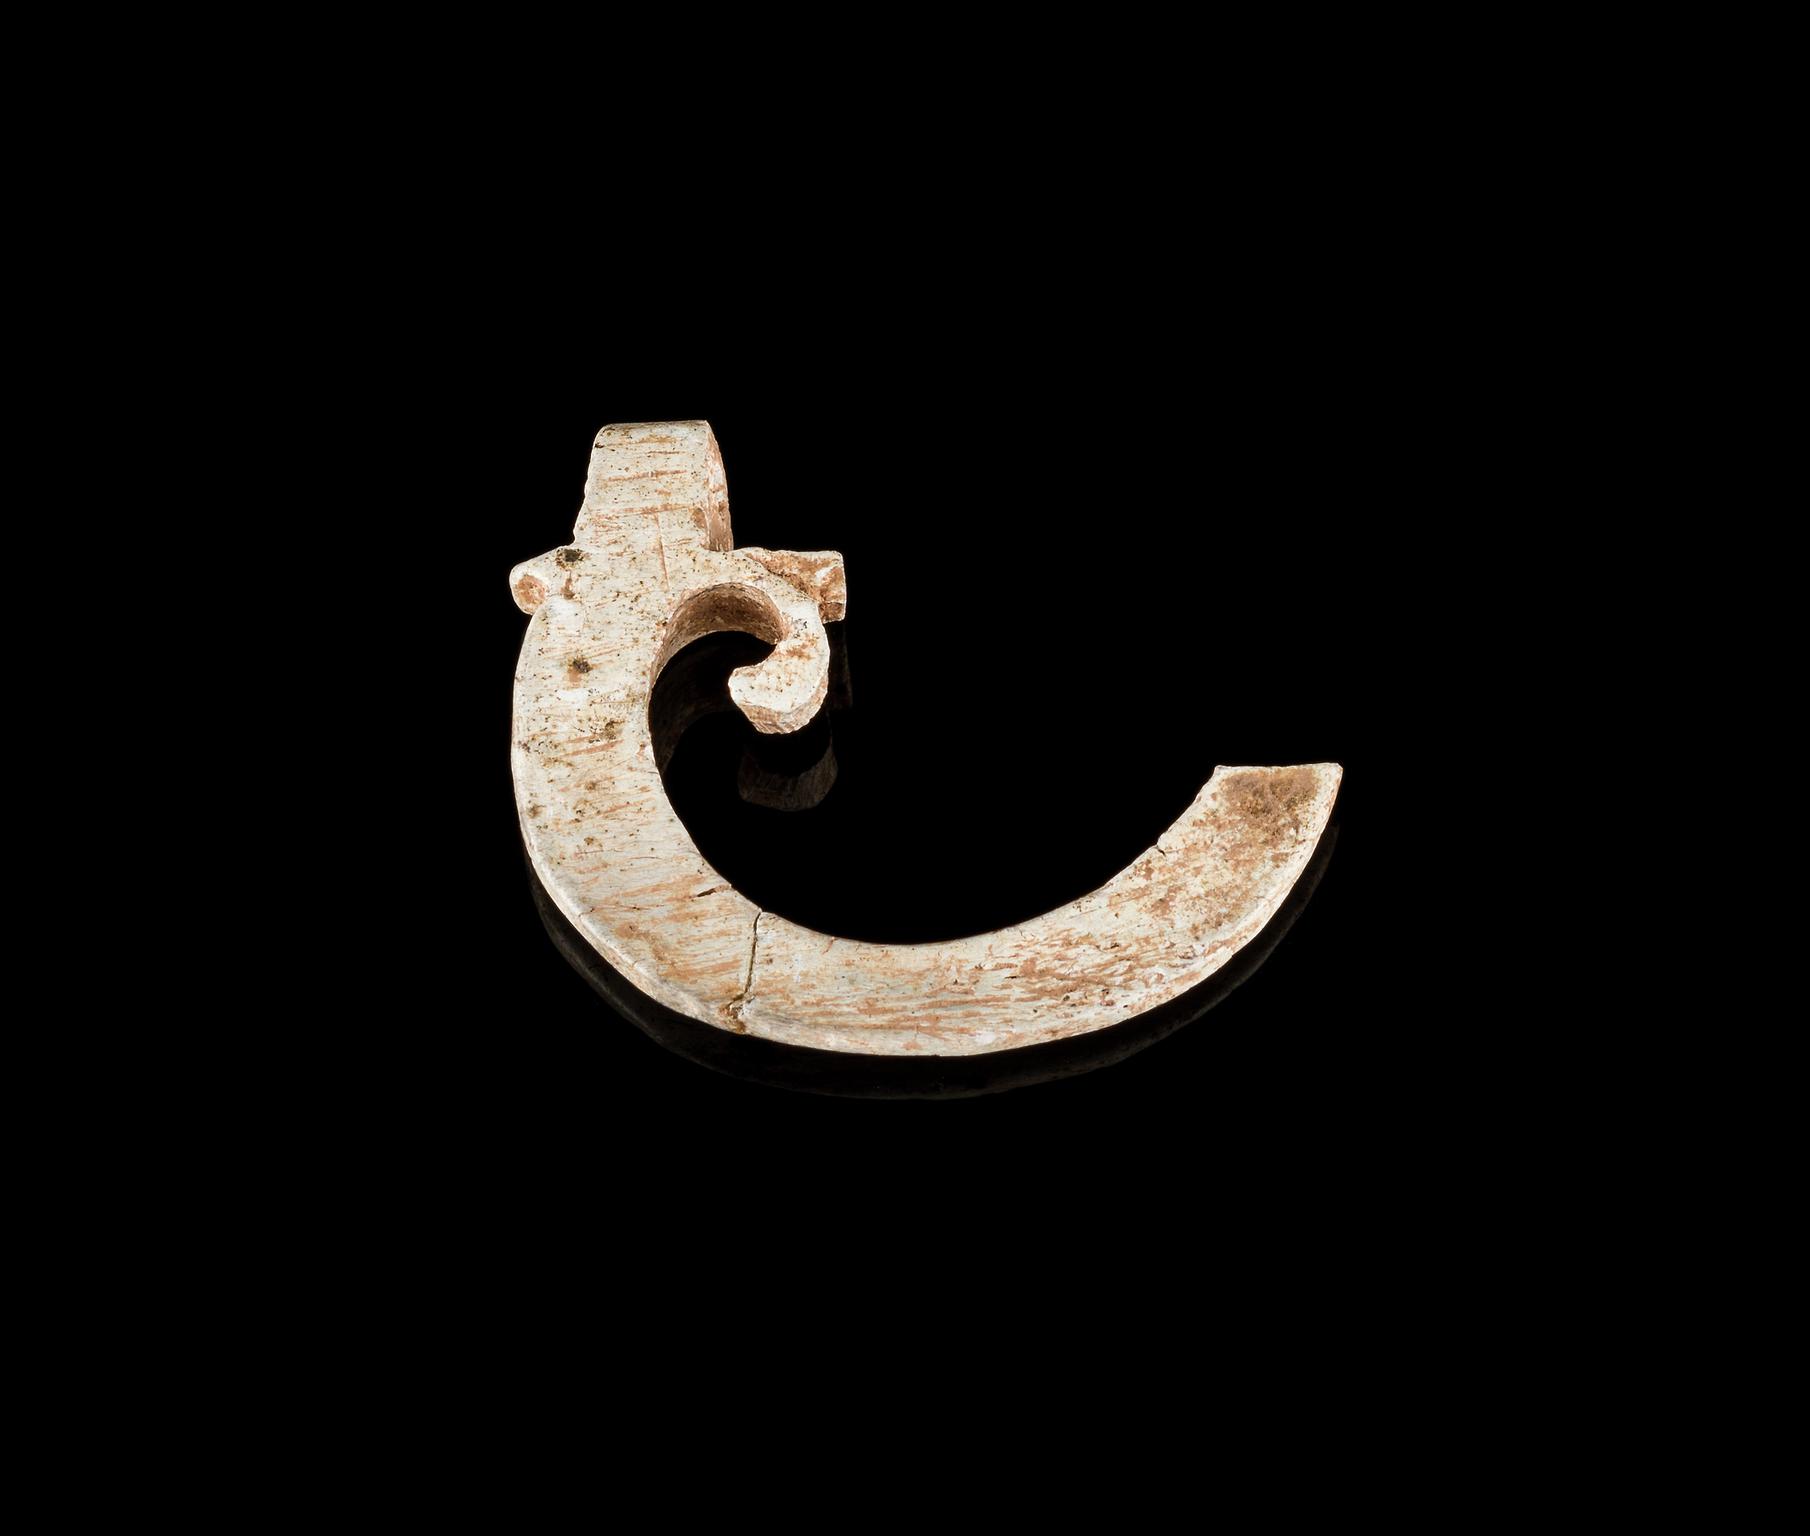 Roman bone buckle fragment